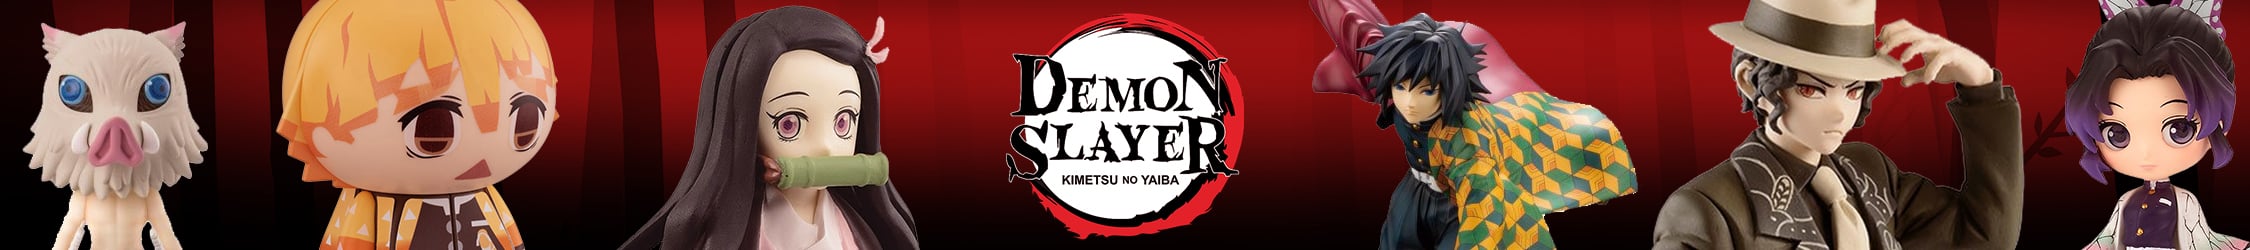 DemonSlayer2250x250